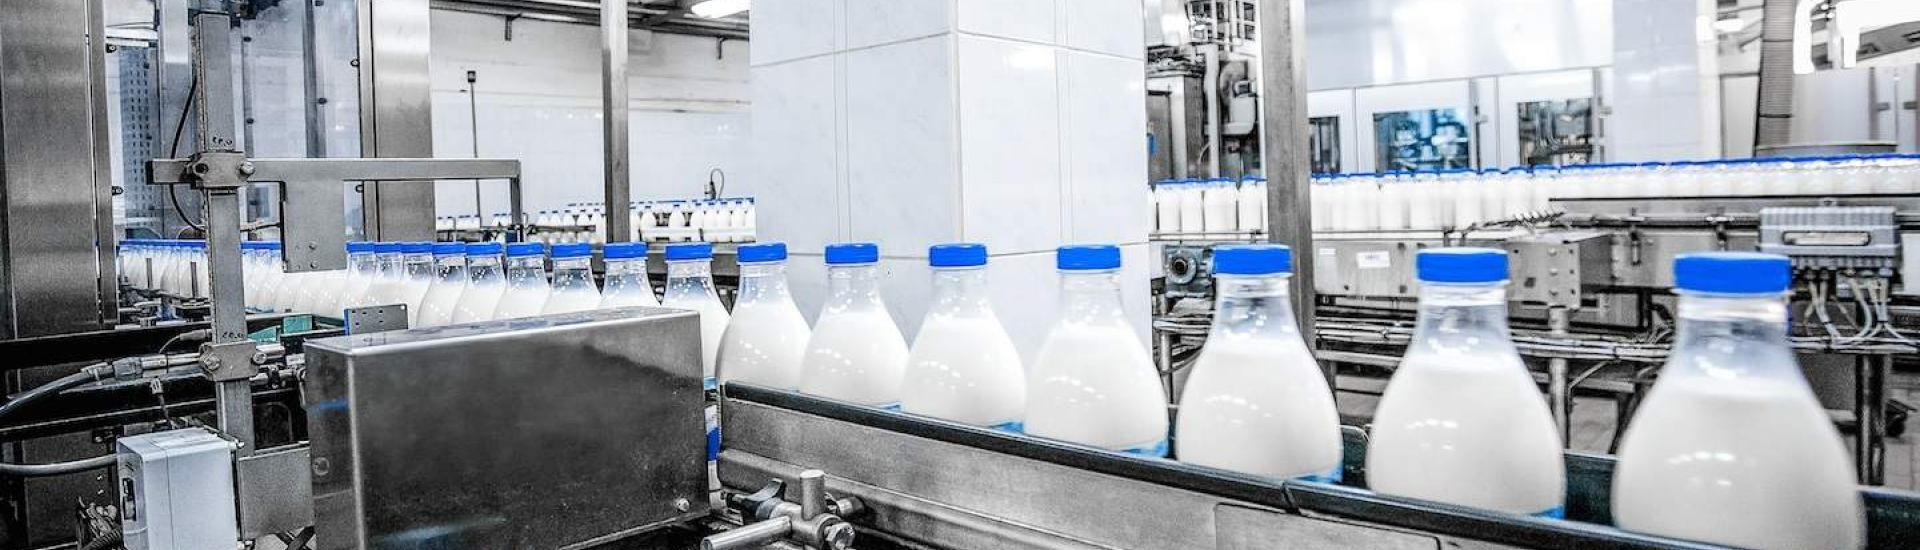 Mælk-automatisering